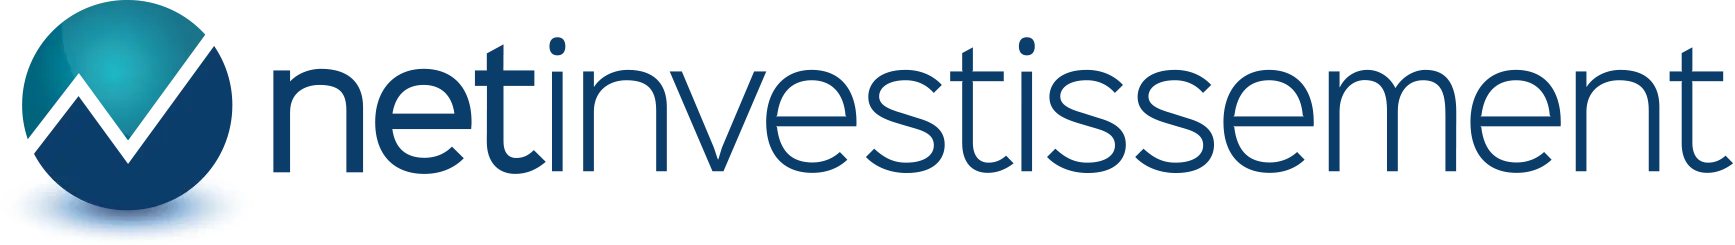 logo netinvestissement